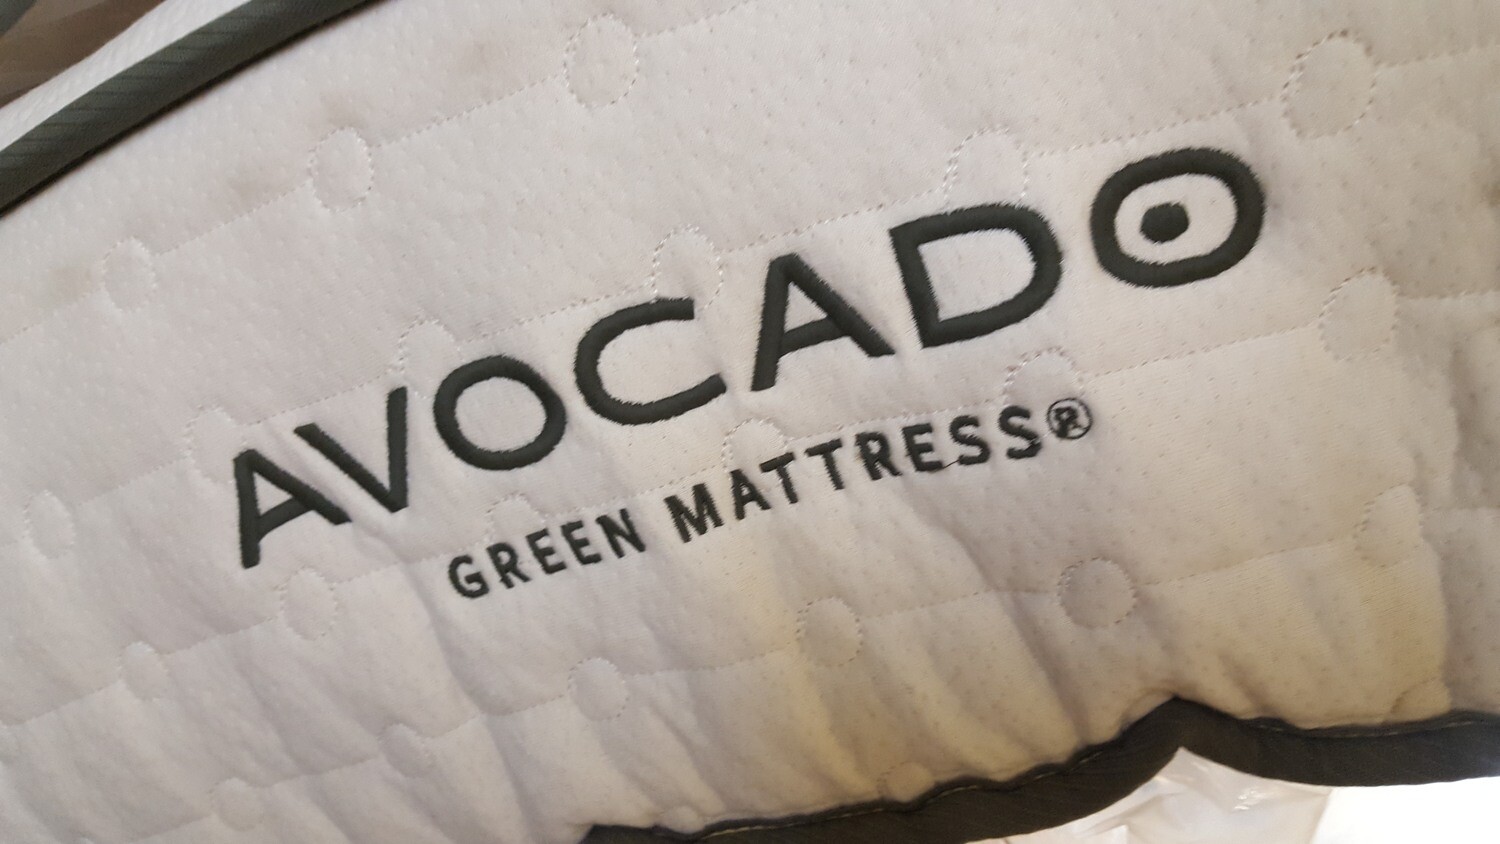 Avocado TWIN XL trial mattress (TX0100) #2212, 2107